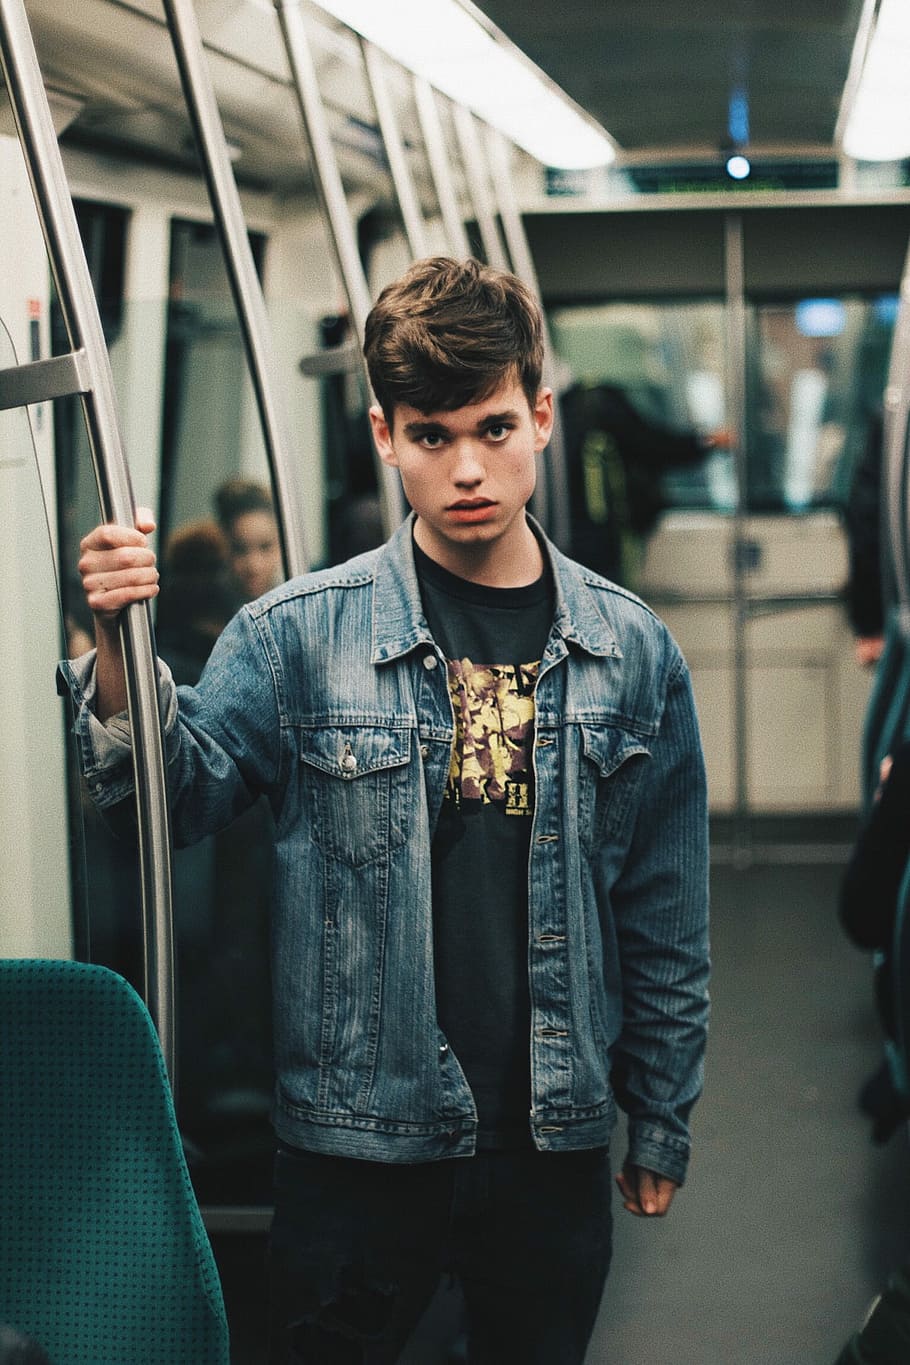 man wearing blue denim jacket standing inside train, man standing inside train while holding bar